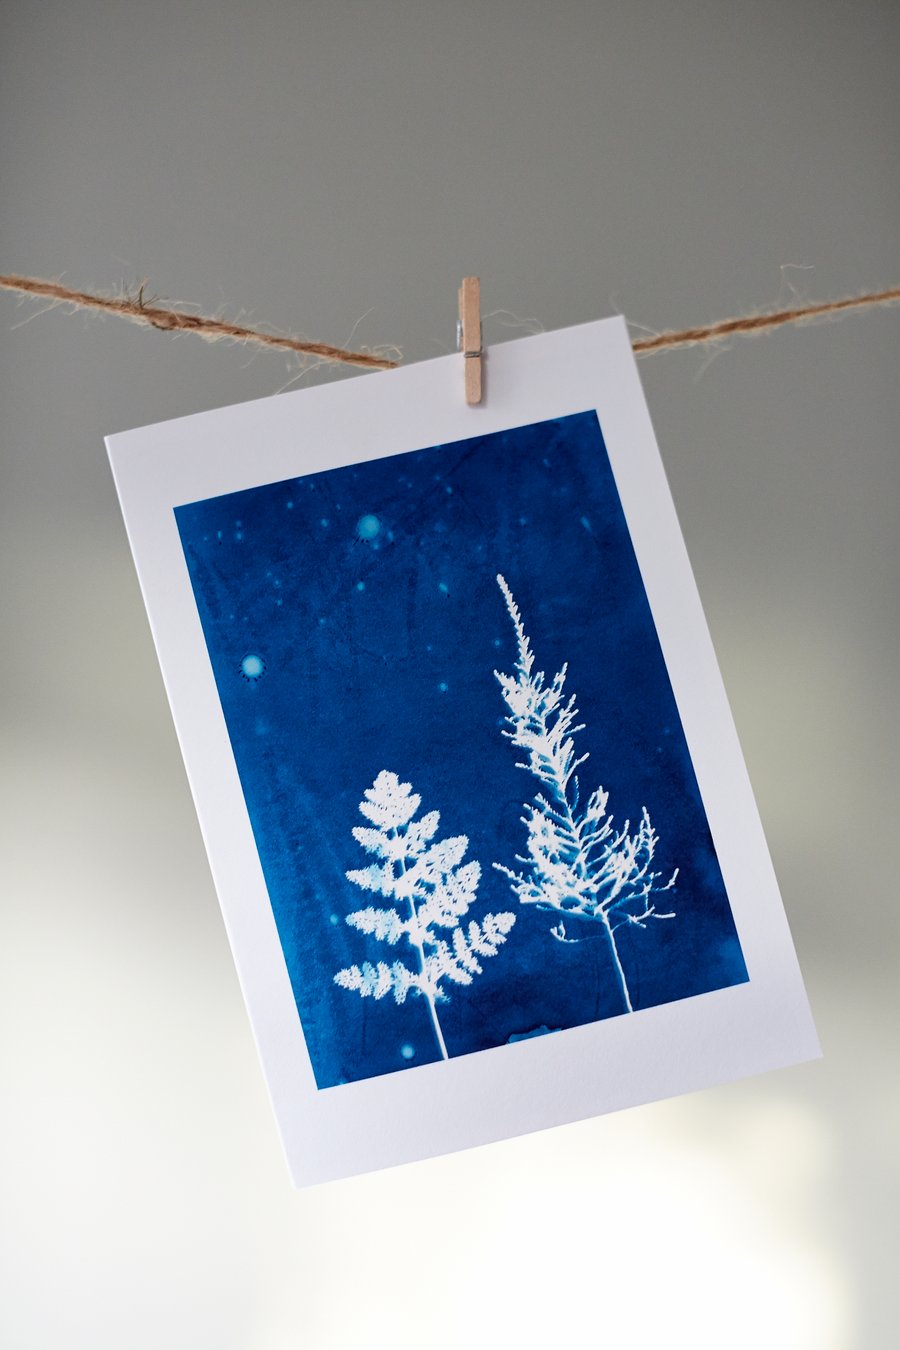 'fern trees, night sky' card from original cyanotype